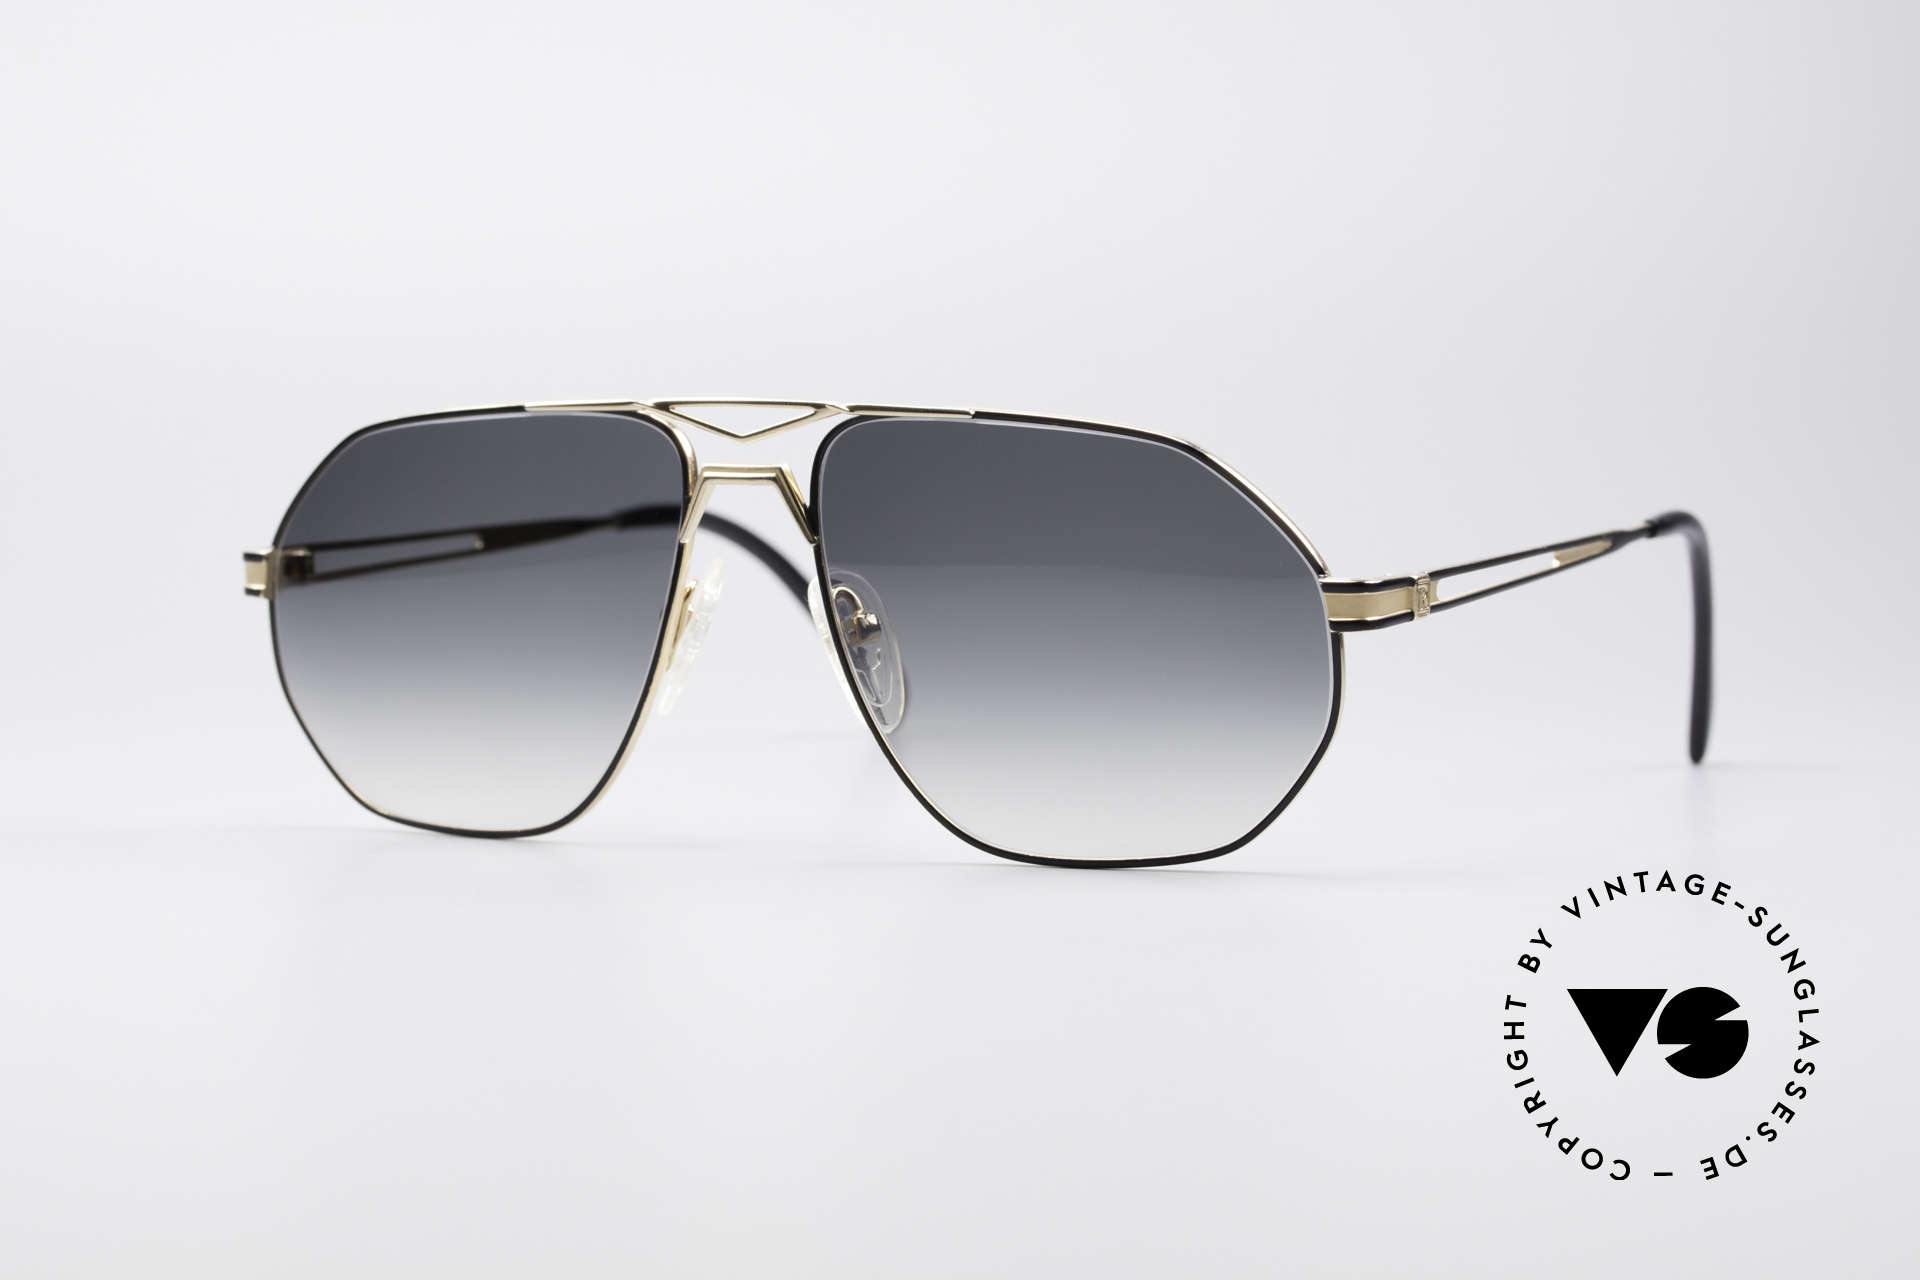 Sunglasses Roman Rothschild R12 Gold Plated Luxury Frame